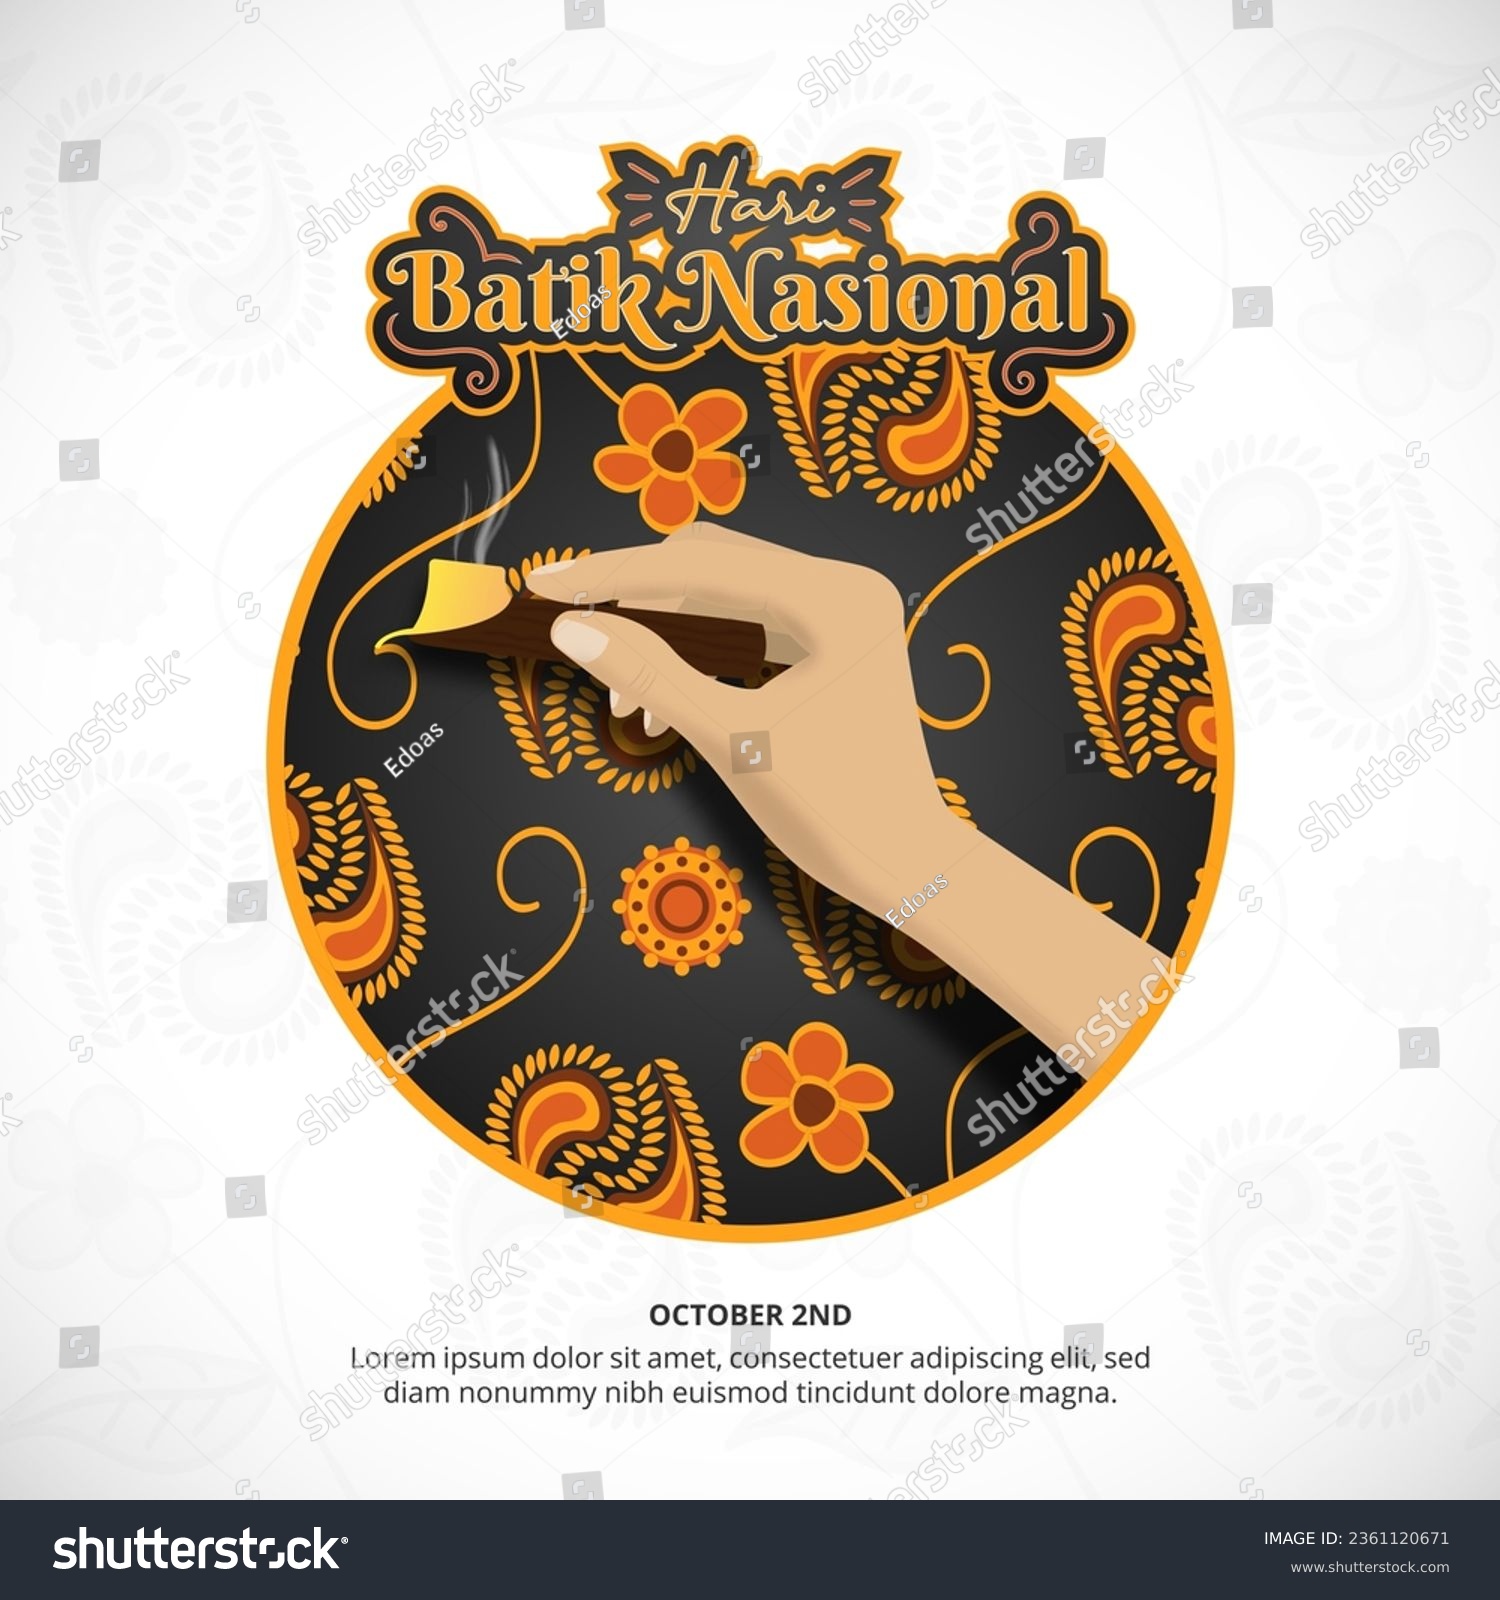 SVG of Square Hari Batik Nasional or National Batik Day background with batik pattern svg